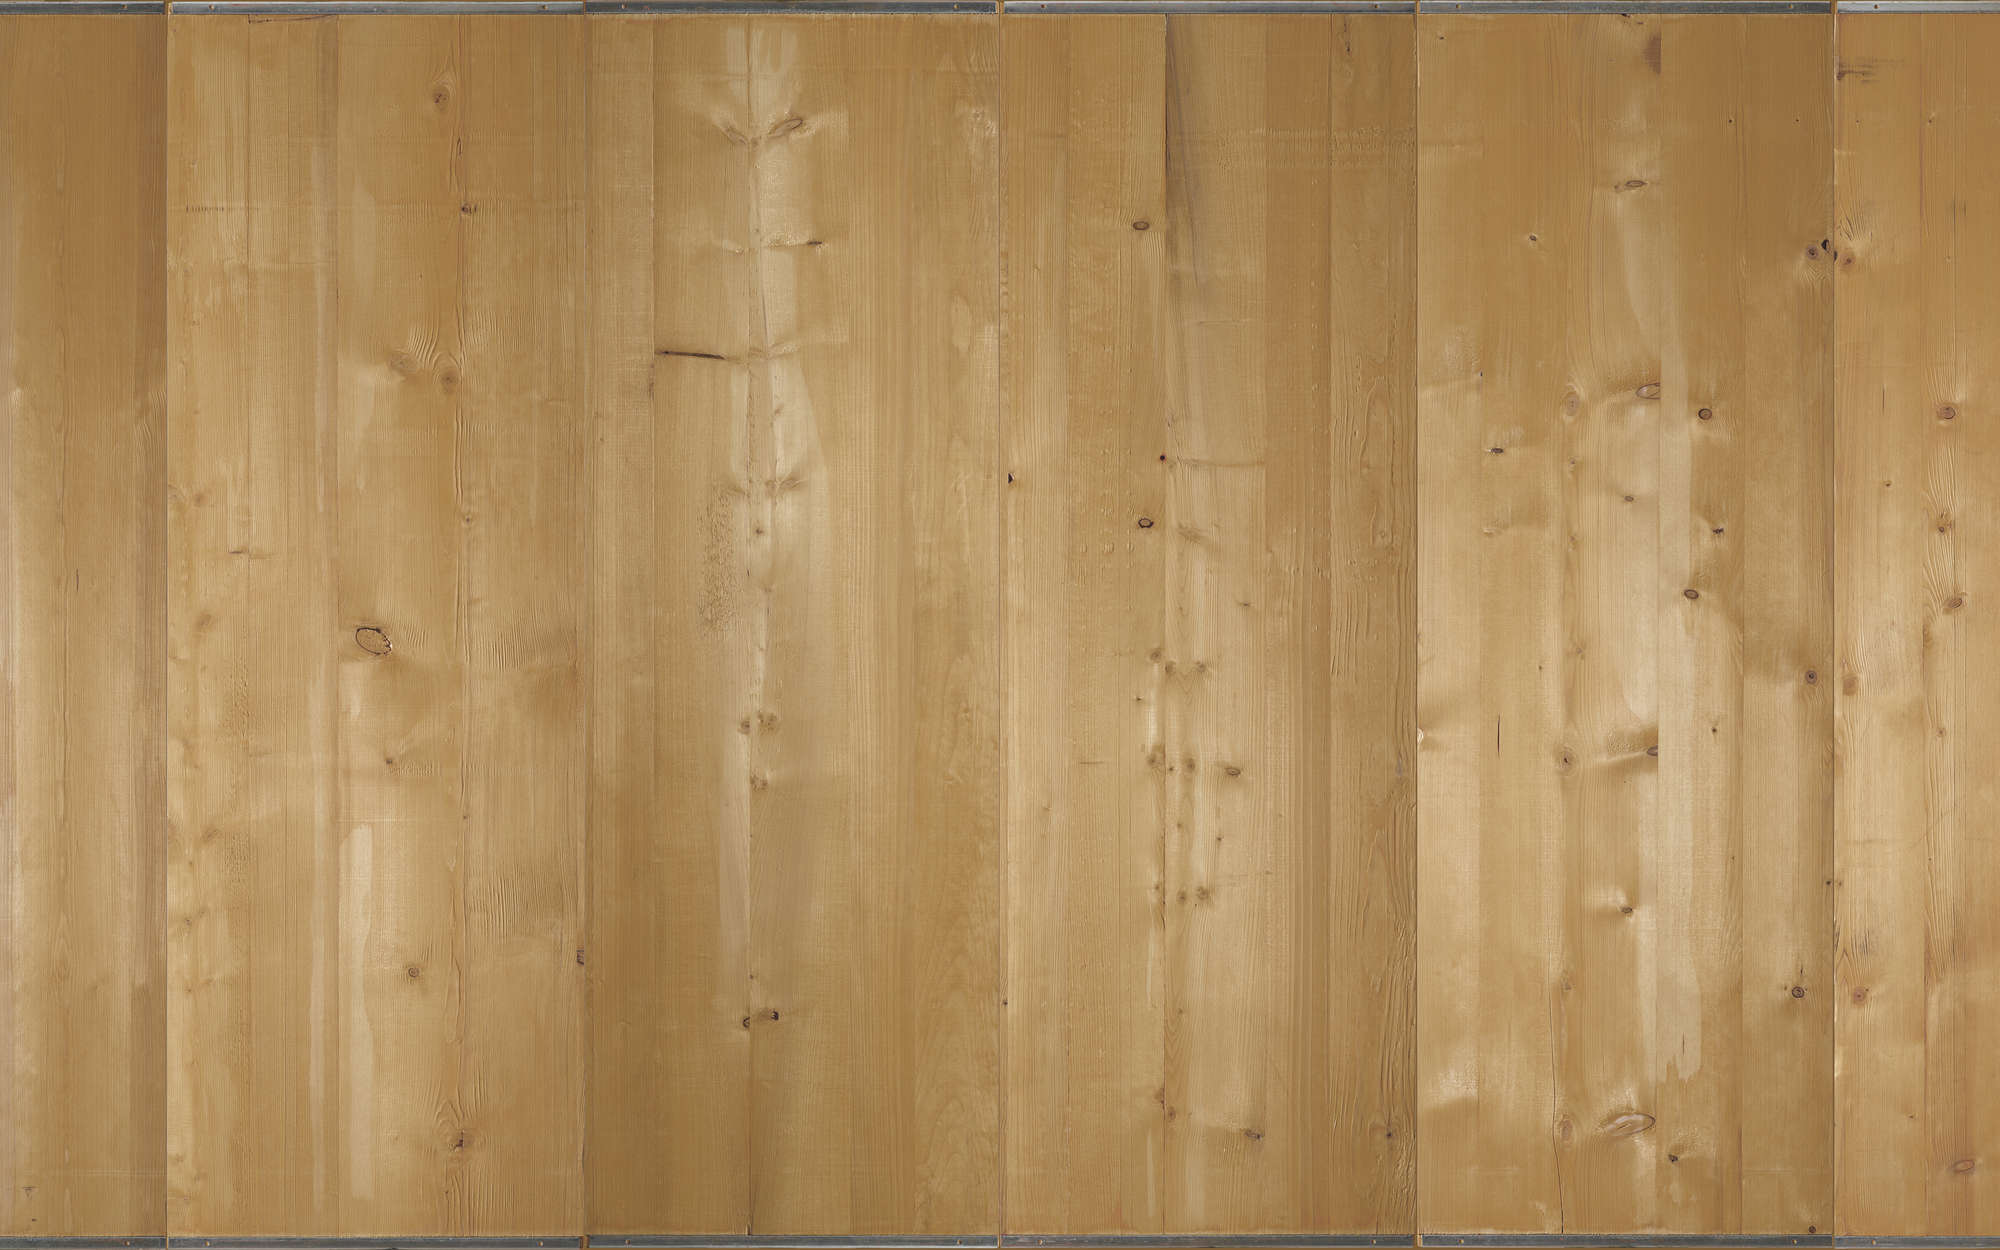             Fotomural tablones de madera clara - Material no tejido texturado
        